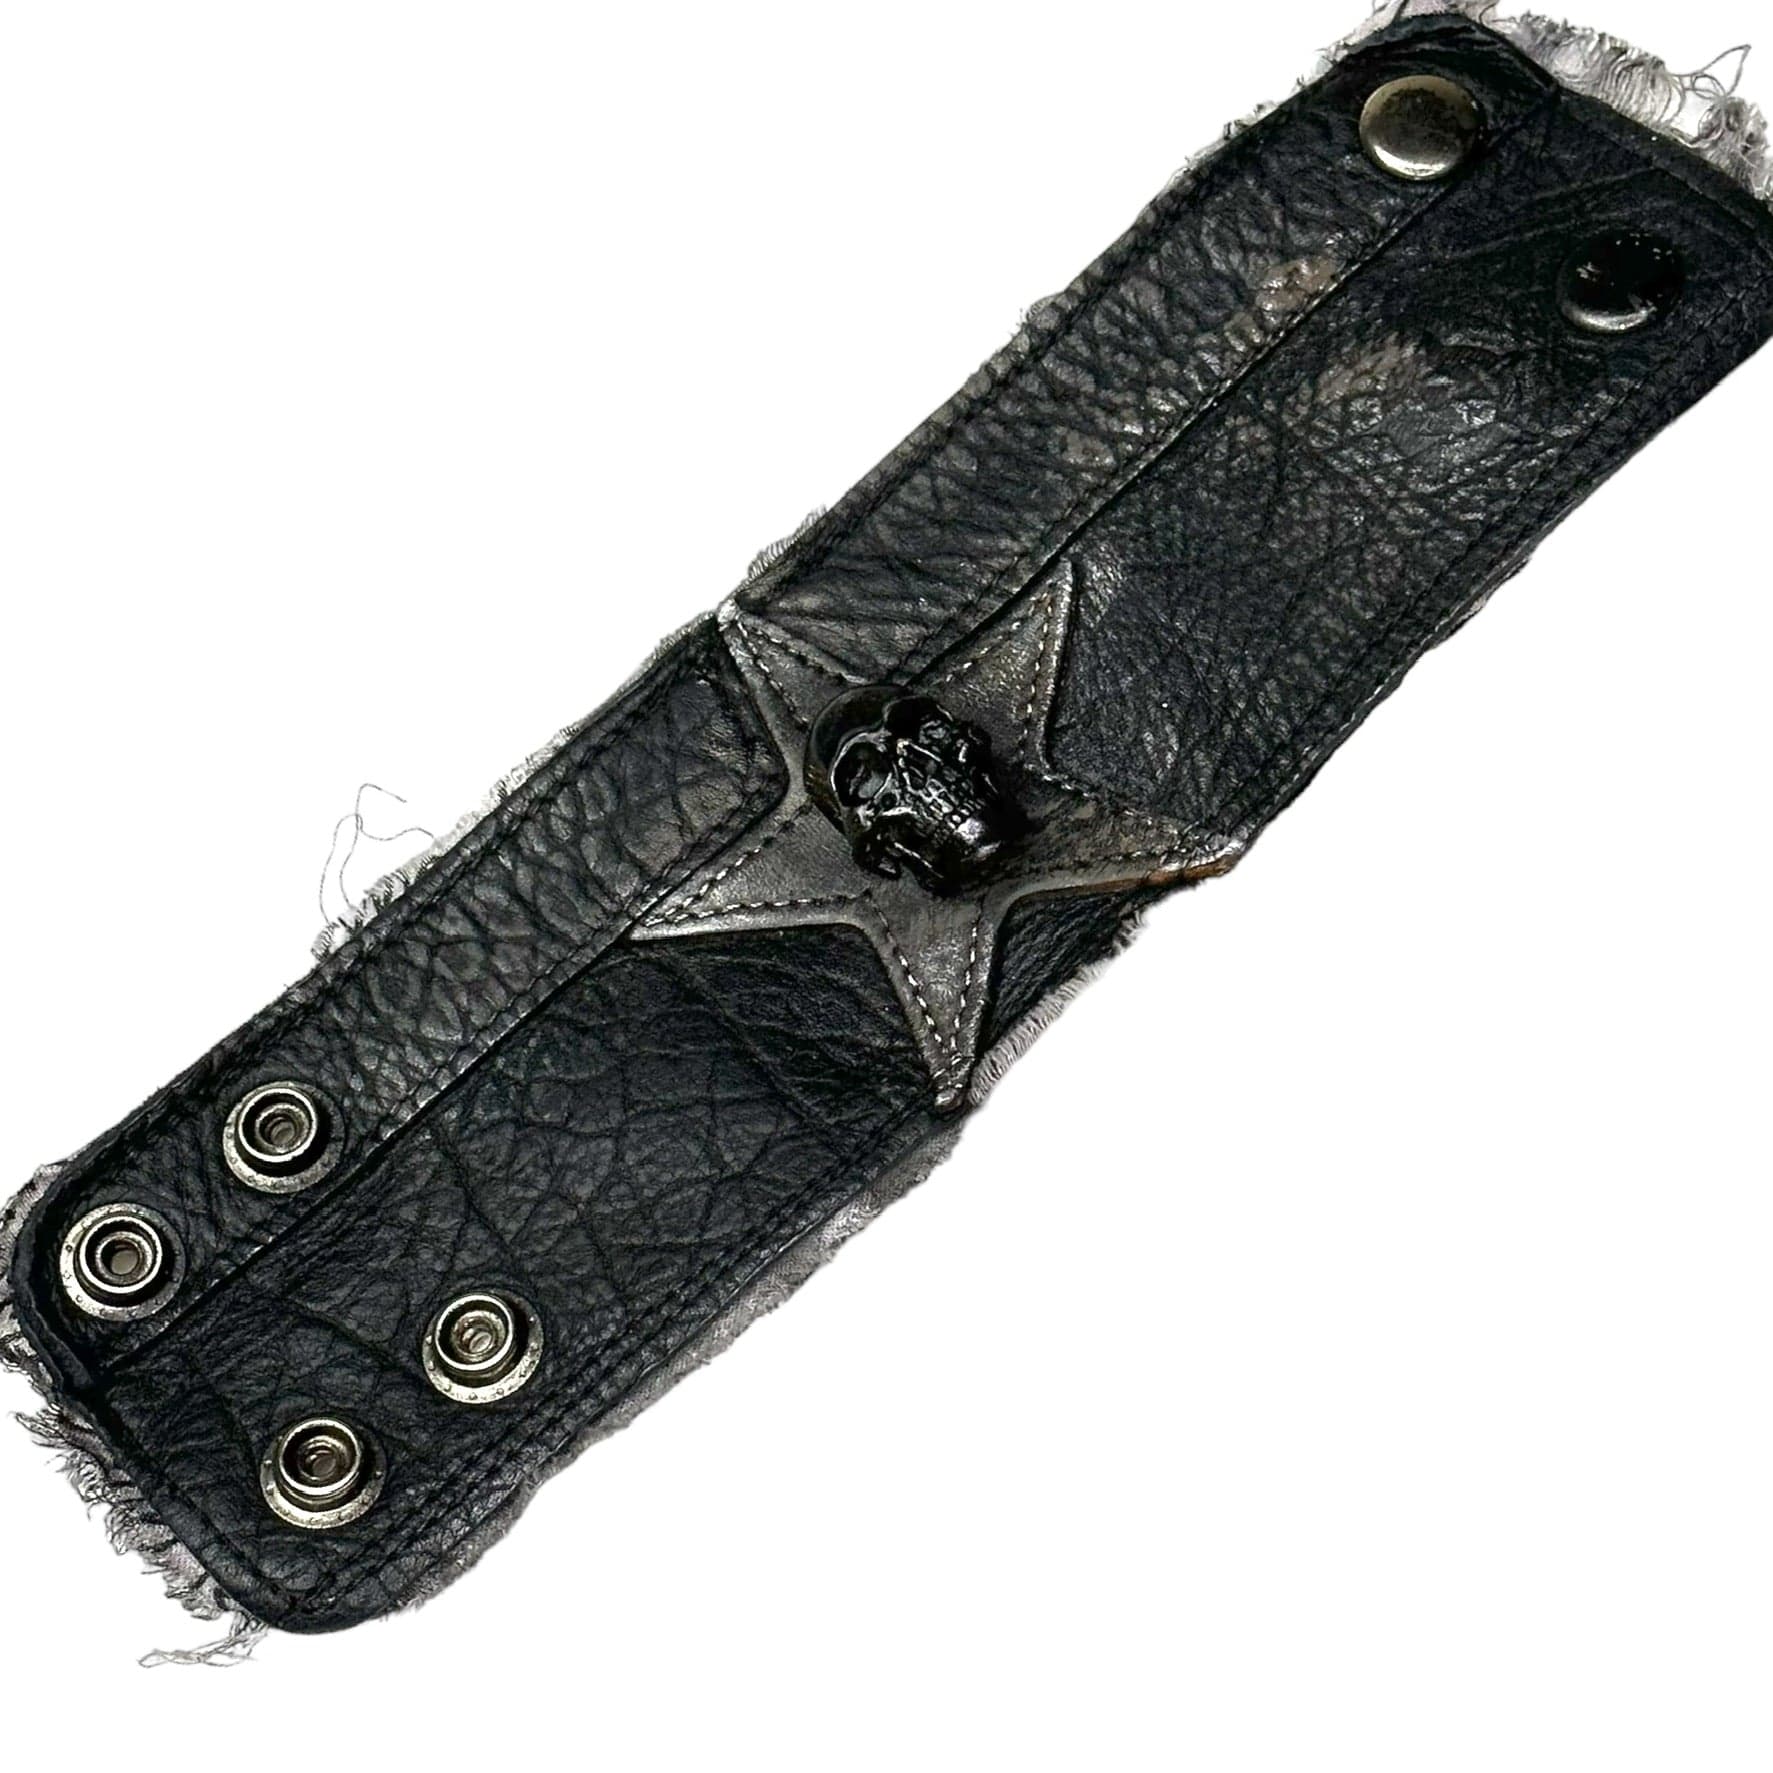 Wornstar Custom - Wristband Leather Cuff - MTO - Black with Star and M